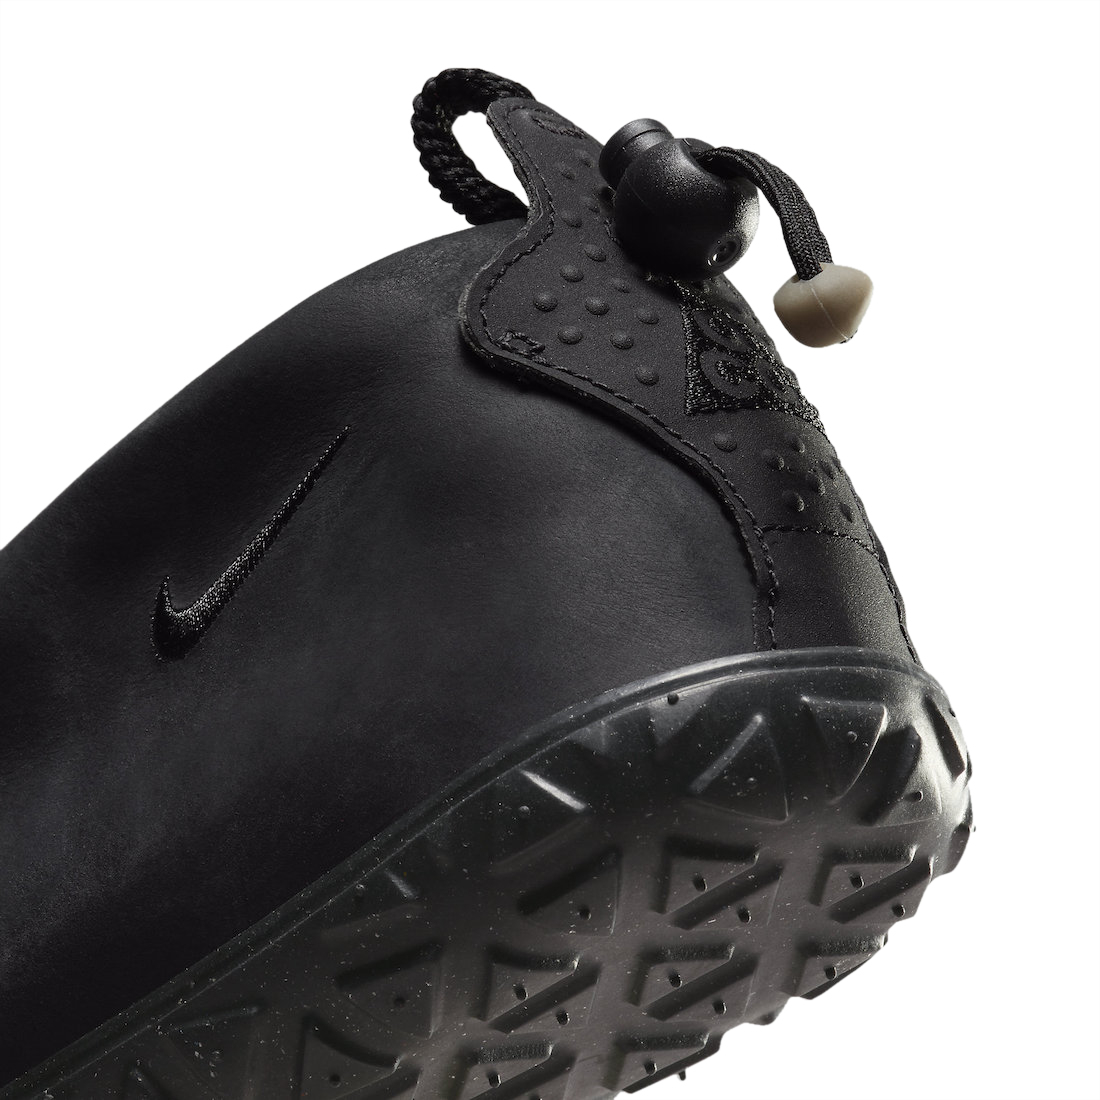 BUY Nike ACG Air Moc Black Leather | Kixify Marketplace